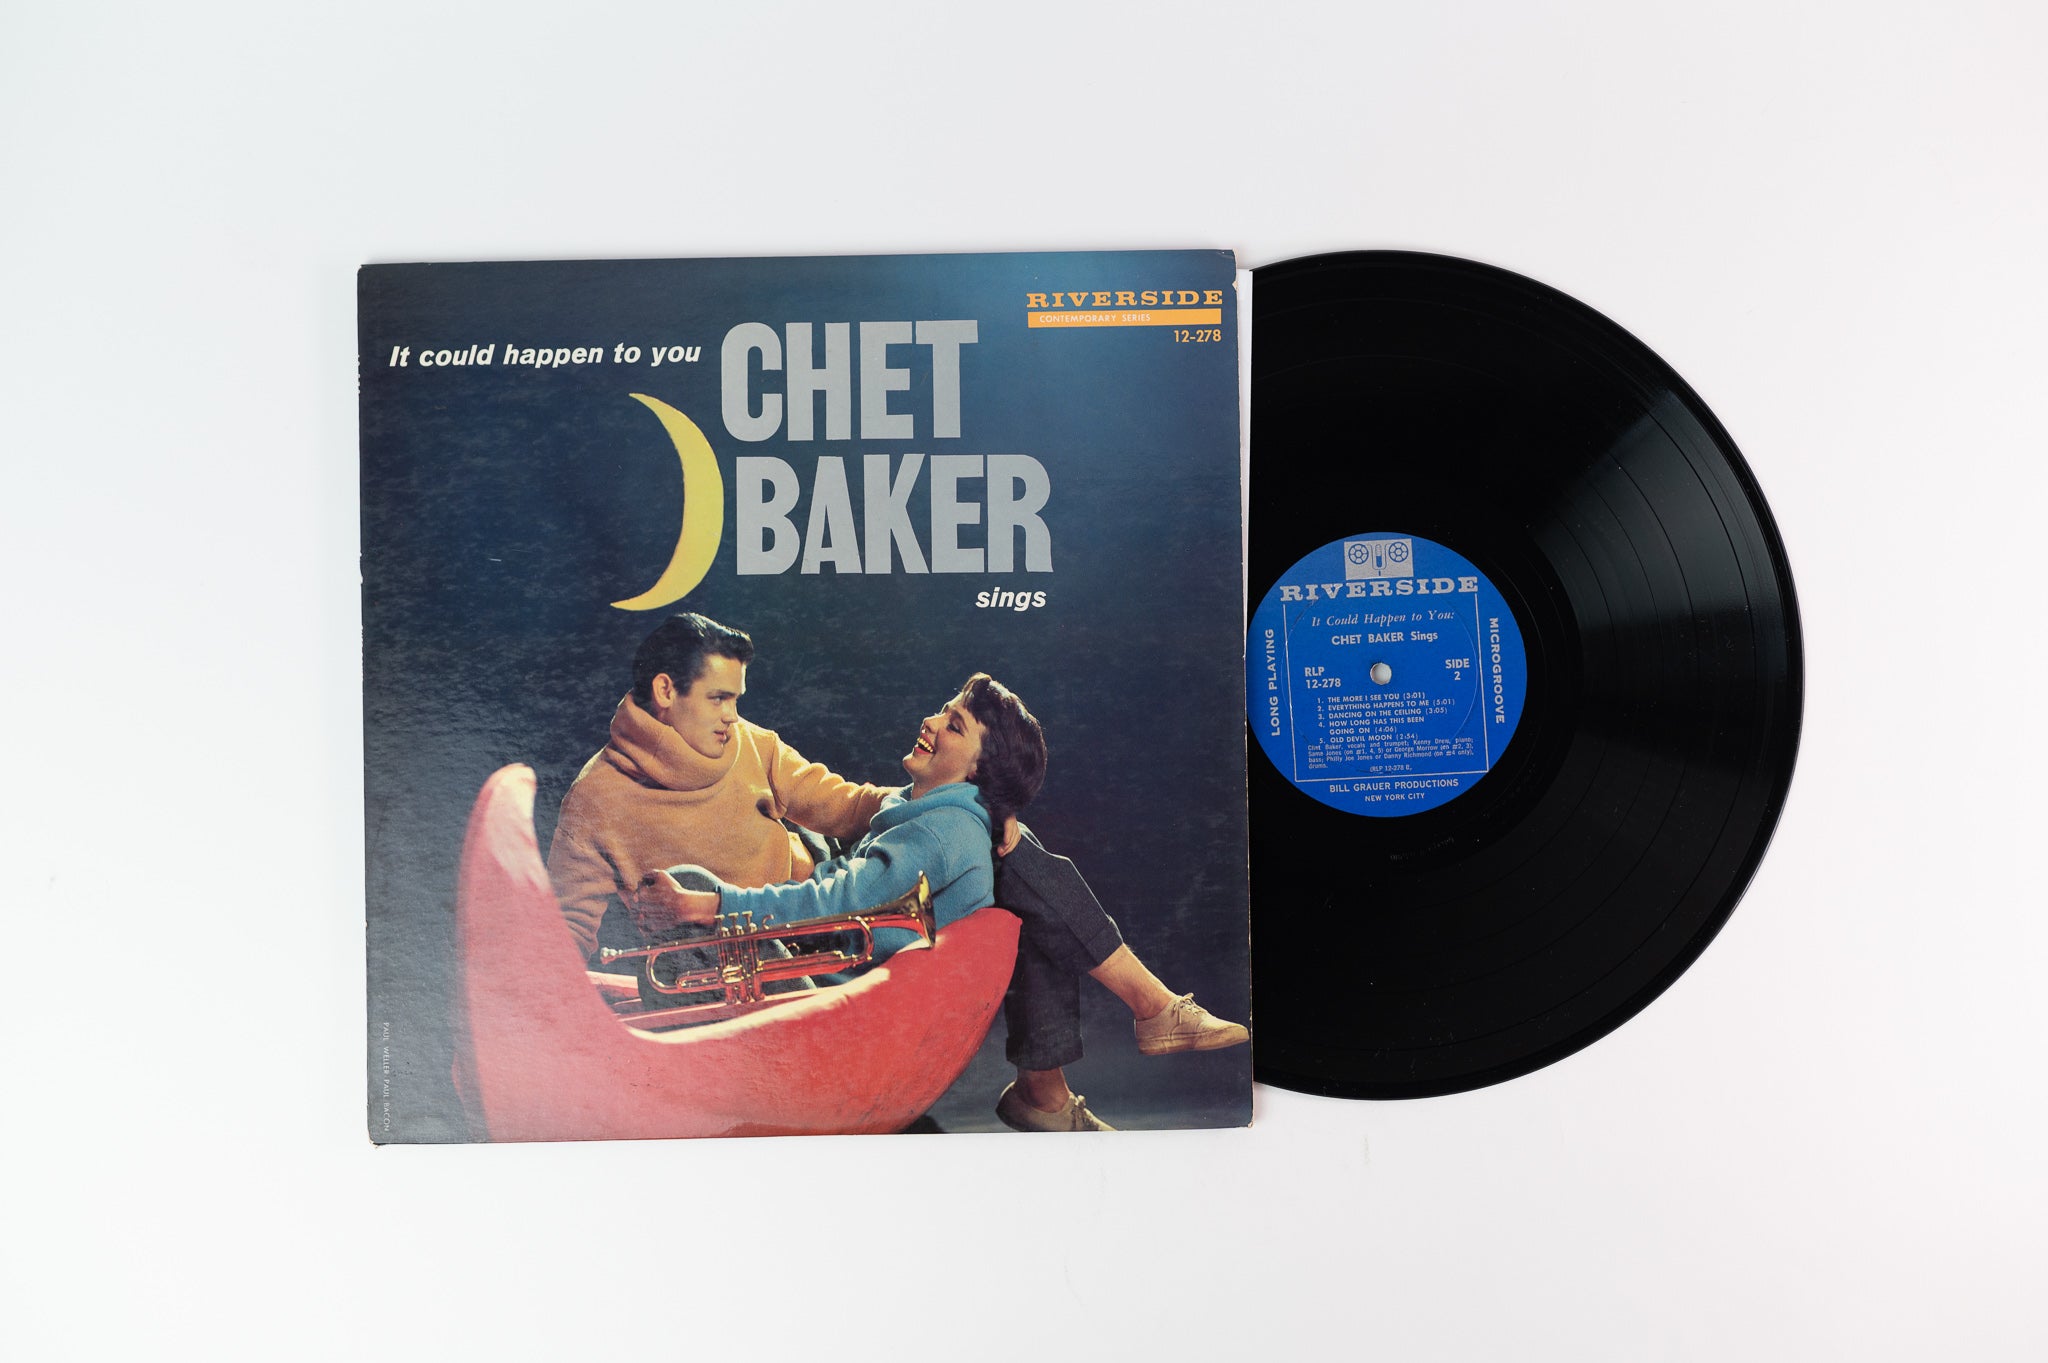 Chet Baker - It Could Happen To You - Chet Baker Sings on Riverside Mono Deep Groove